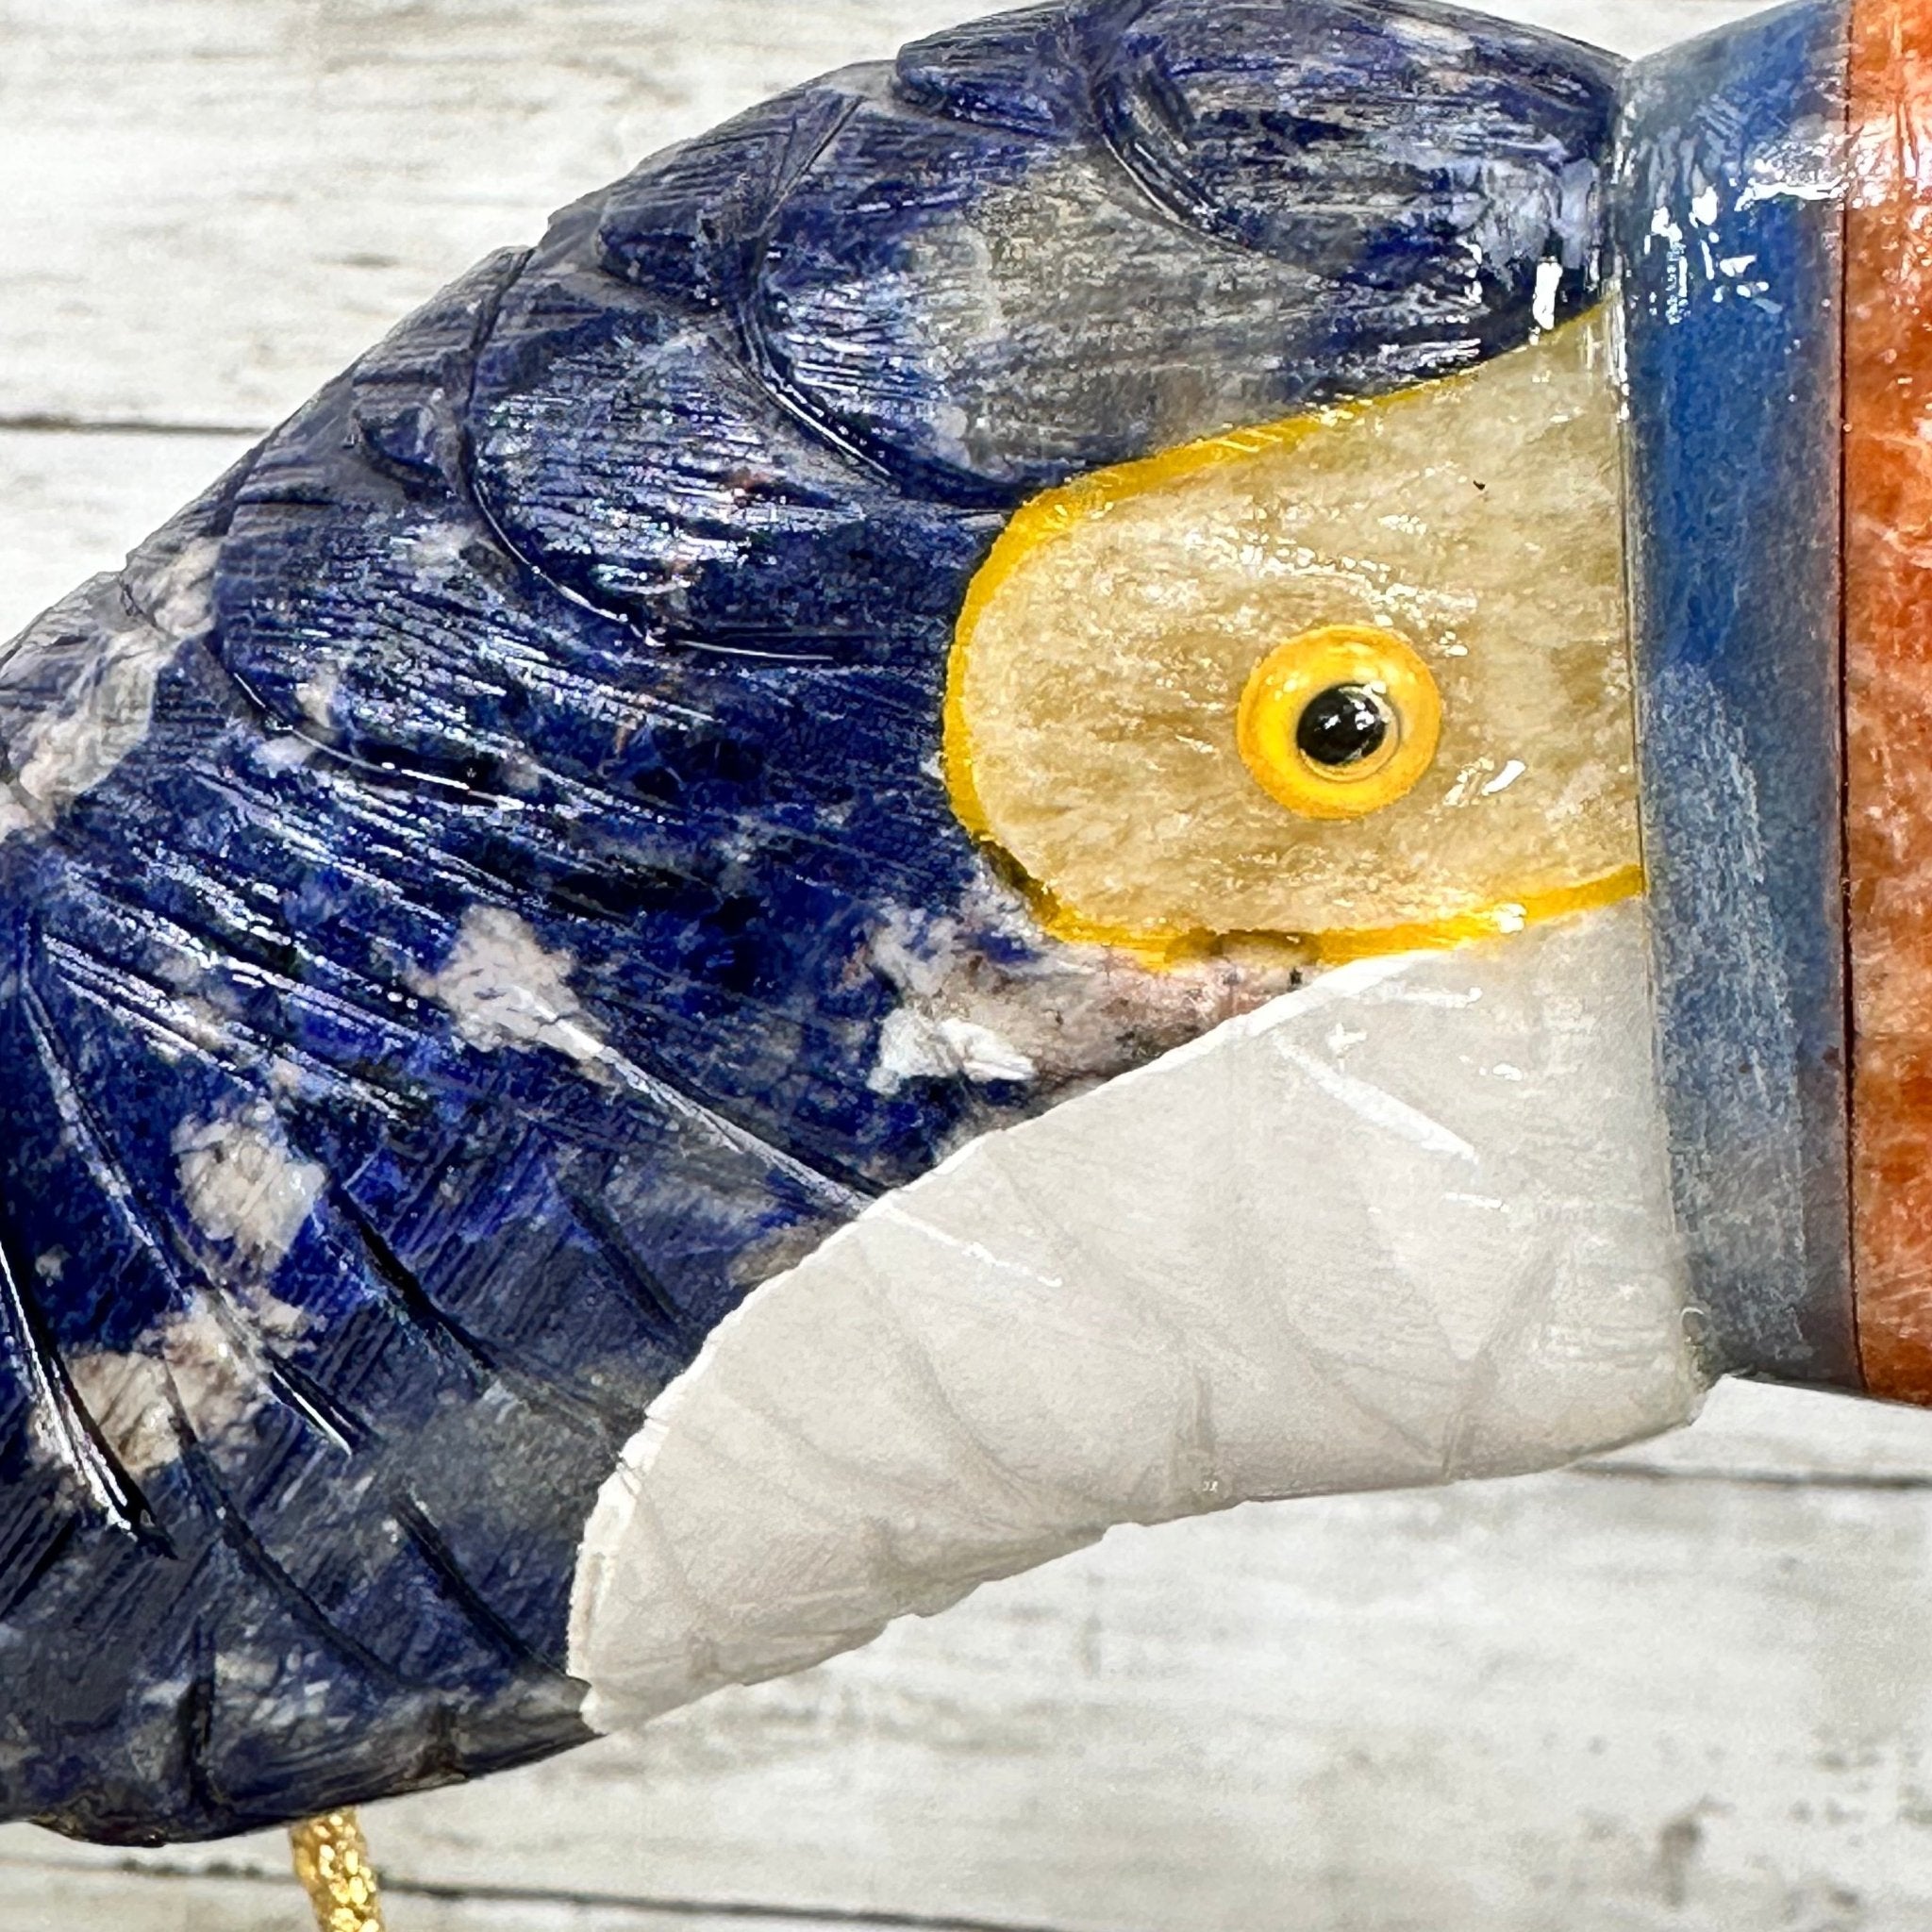 Extra Large Hand-Carved Sodalite Toucan Bird w/ Amethyst Cluster Base #3006-SOTAM-002 - Brazil GemsBrazil GemsExtra Large Hand-Carved Sodalite Toucan Bird w/ Amethyst Cluster Base #3006-SOTAM-002Crystal Birds3006-SOTAM-002